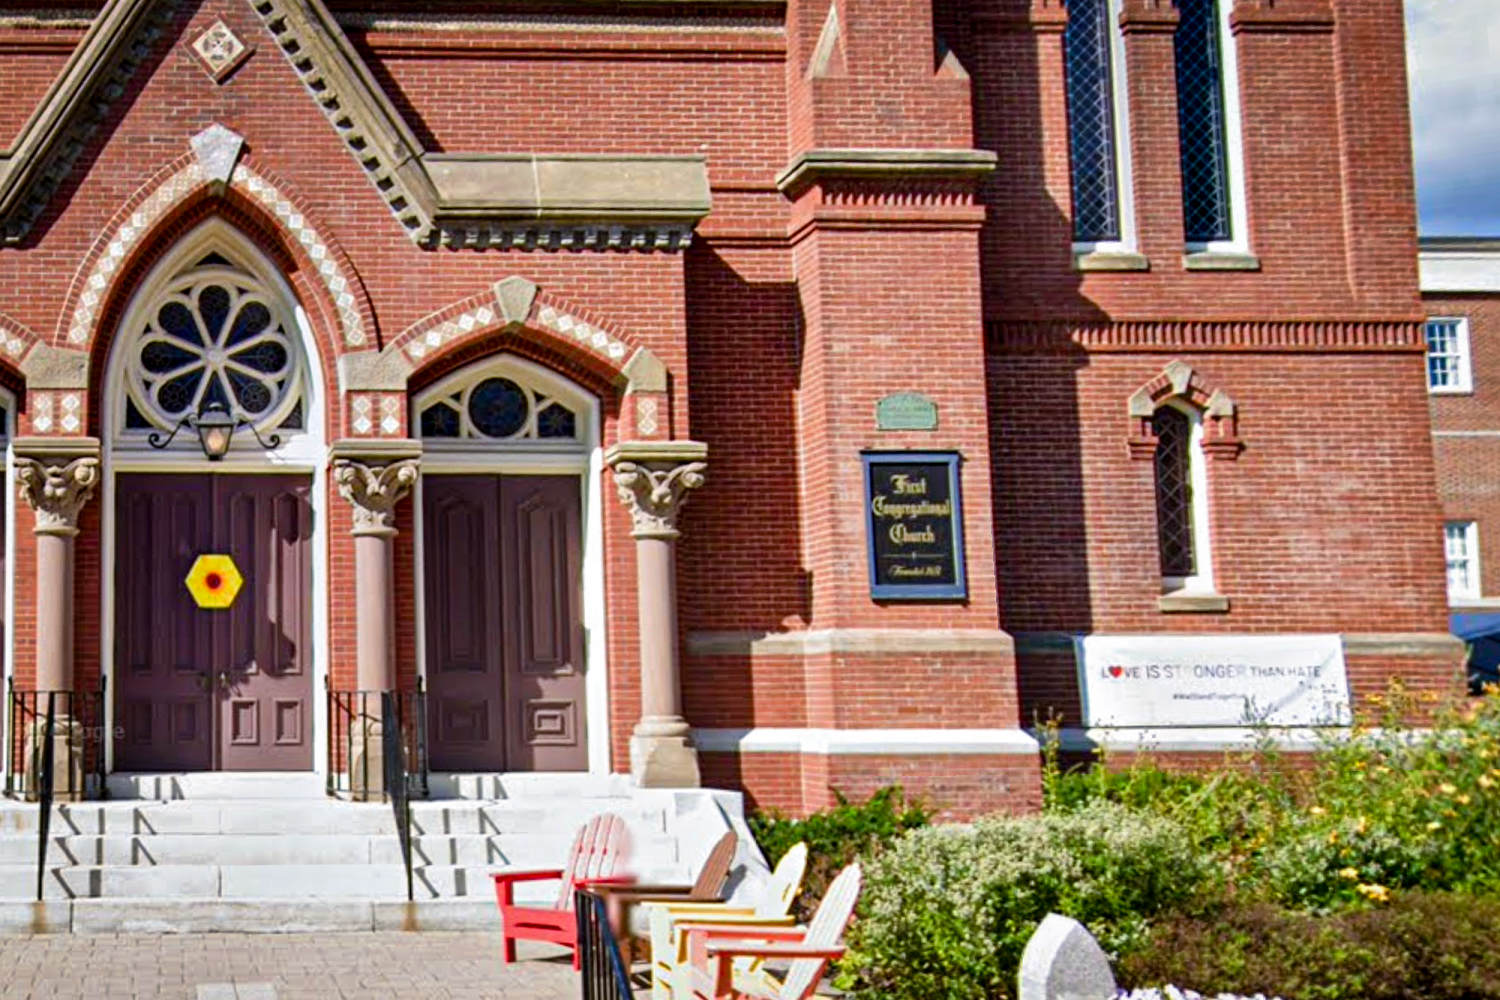 Pride flags outside of Massachusetts church vandalized, minister says